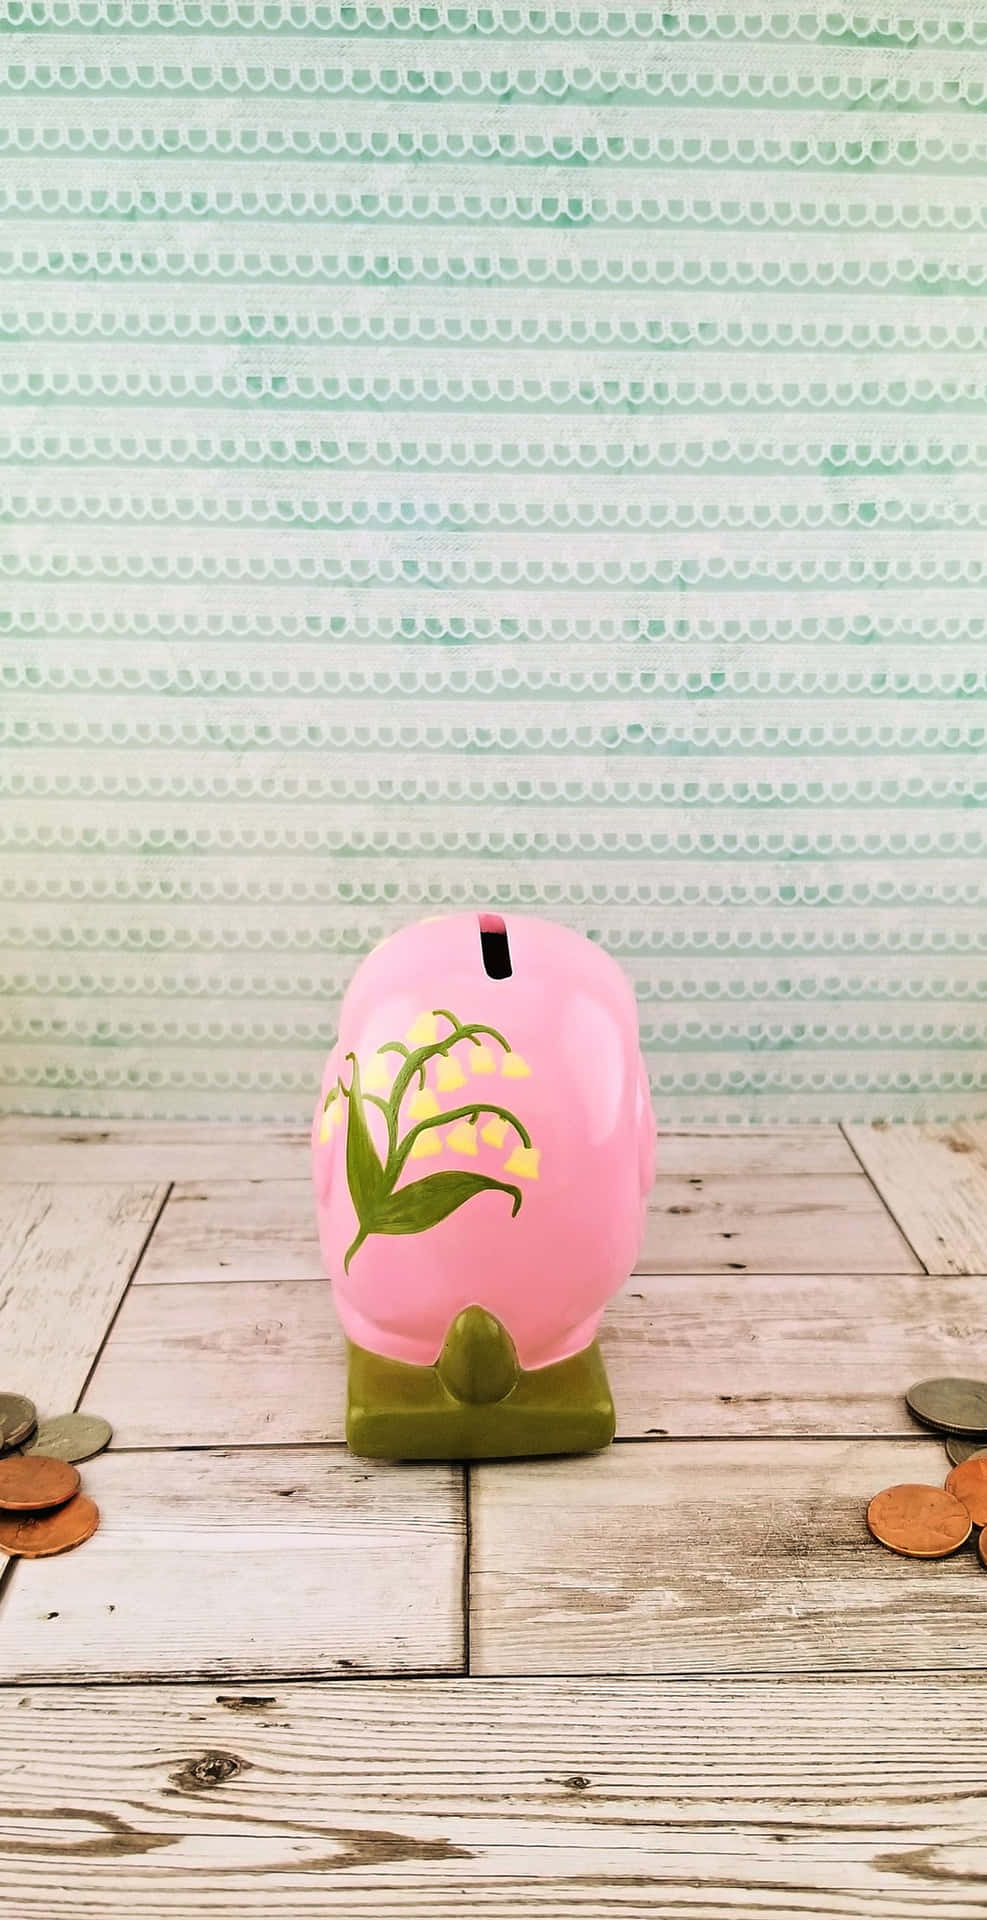 A Pink Snail Crawling Gracefully Wallpaper